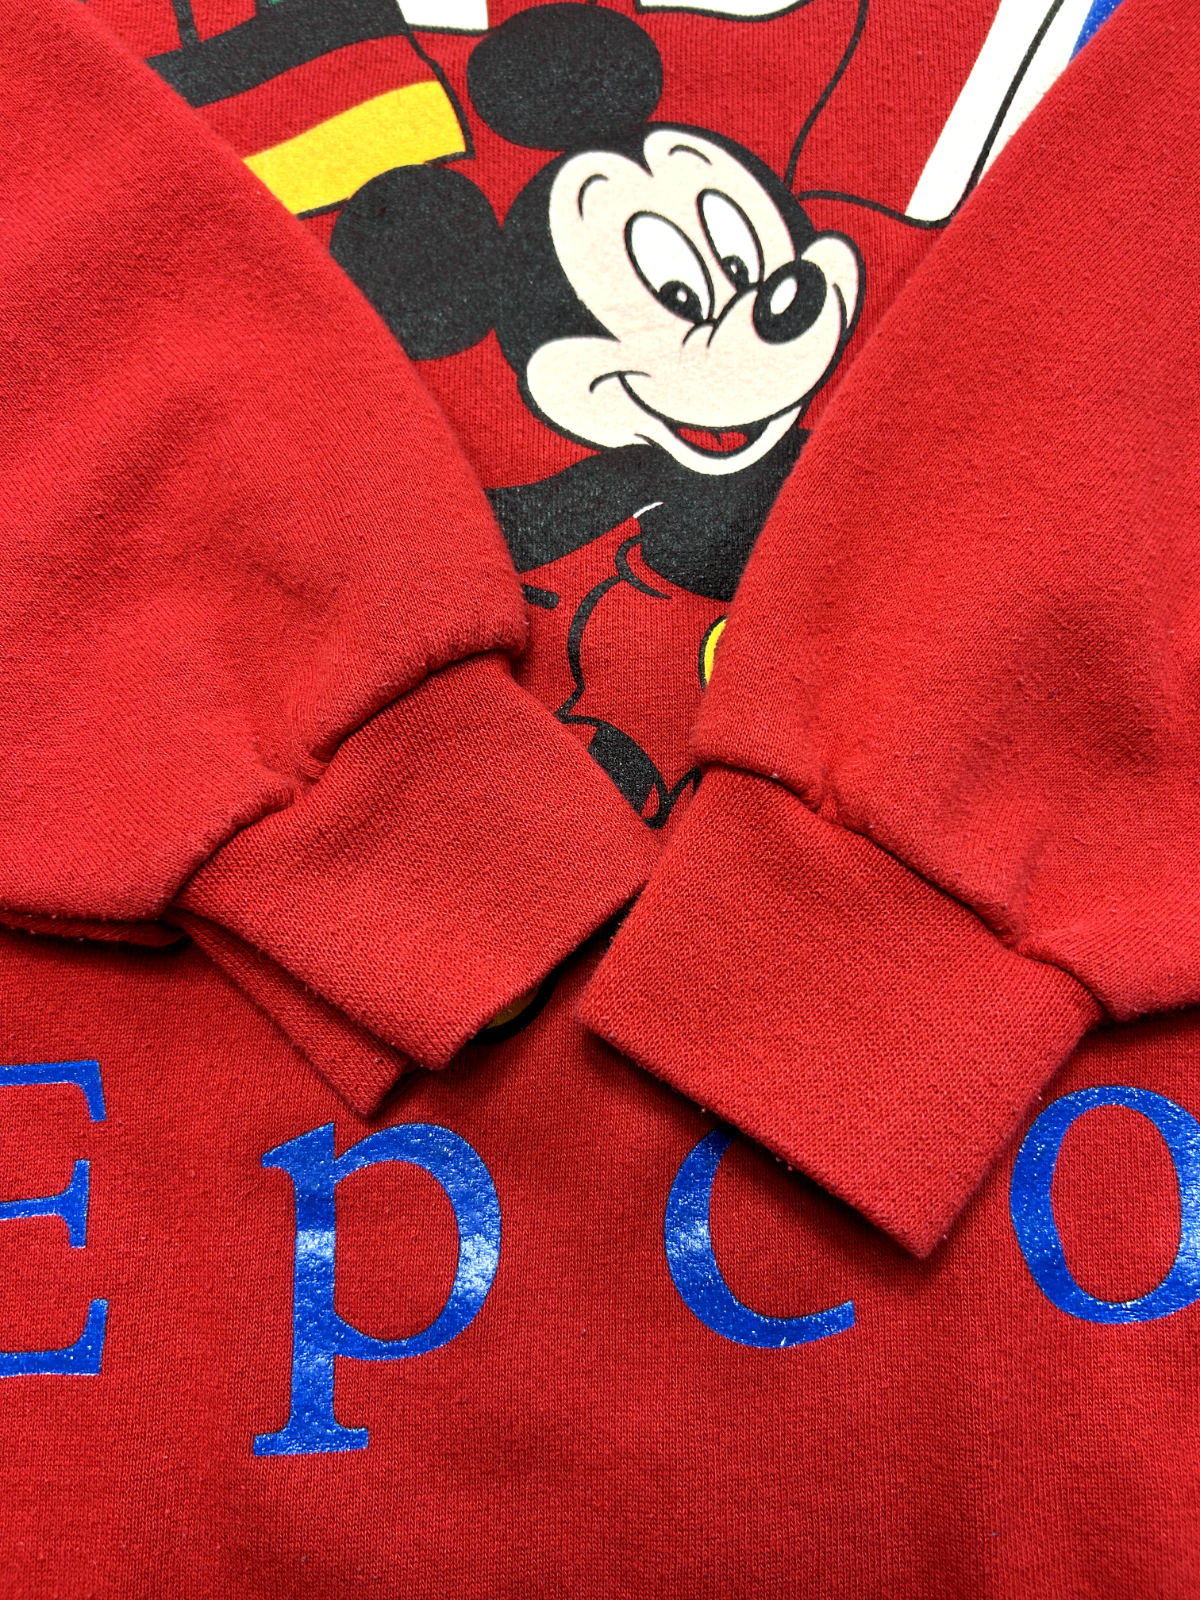 Vintage 80s Disney Mickey Mouse Epcot Destination Graphic Sweatshirt Sz 4XL Red